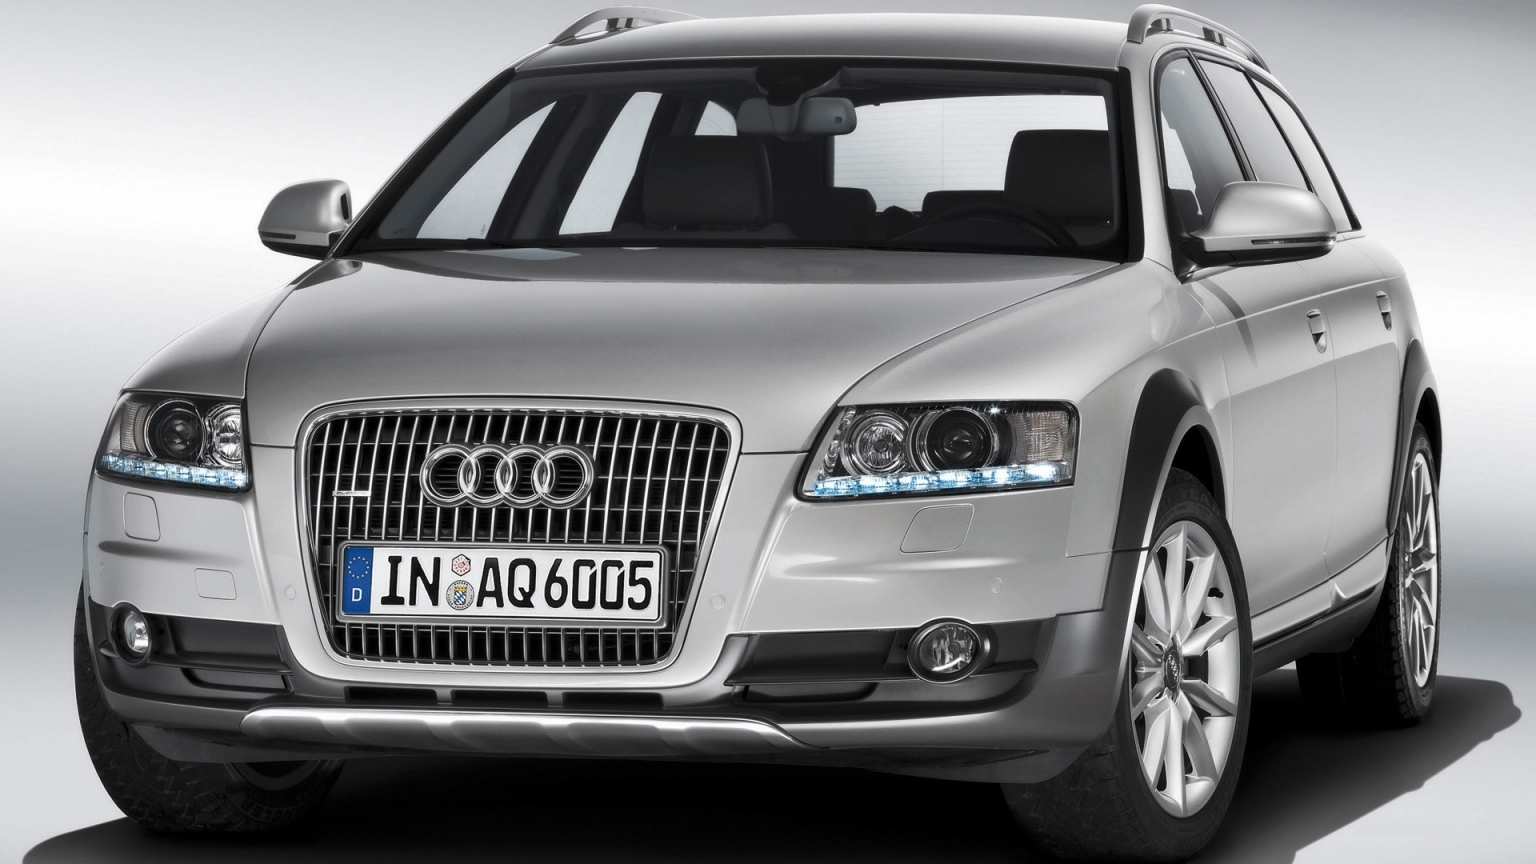 2009 Audi A6 allroad quattro - Front Angle for 1536 x 864 HDTV resolution